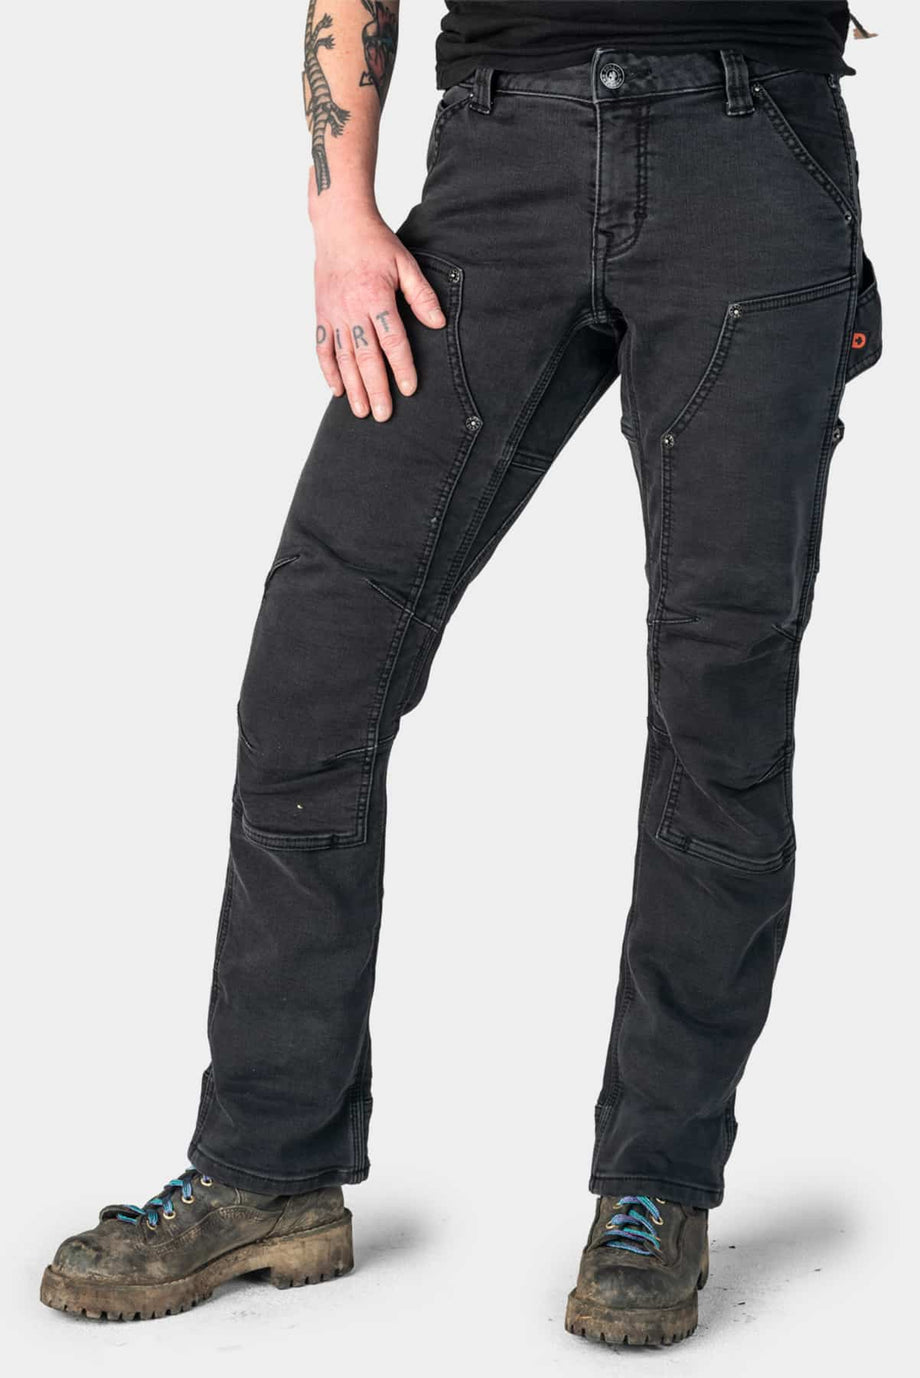 Black Denim Jeggings, Power Lycra Fabric, Stretchable, Size L, XL